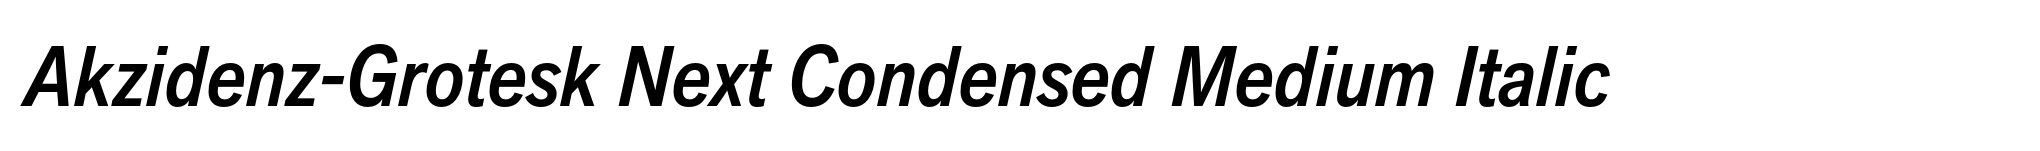 Akzidenz-Grotesk Next Condensed Medium Italic image